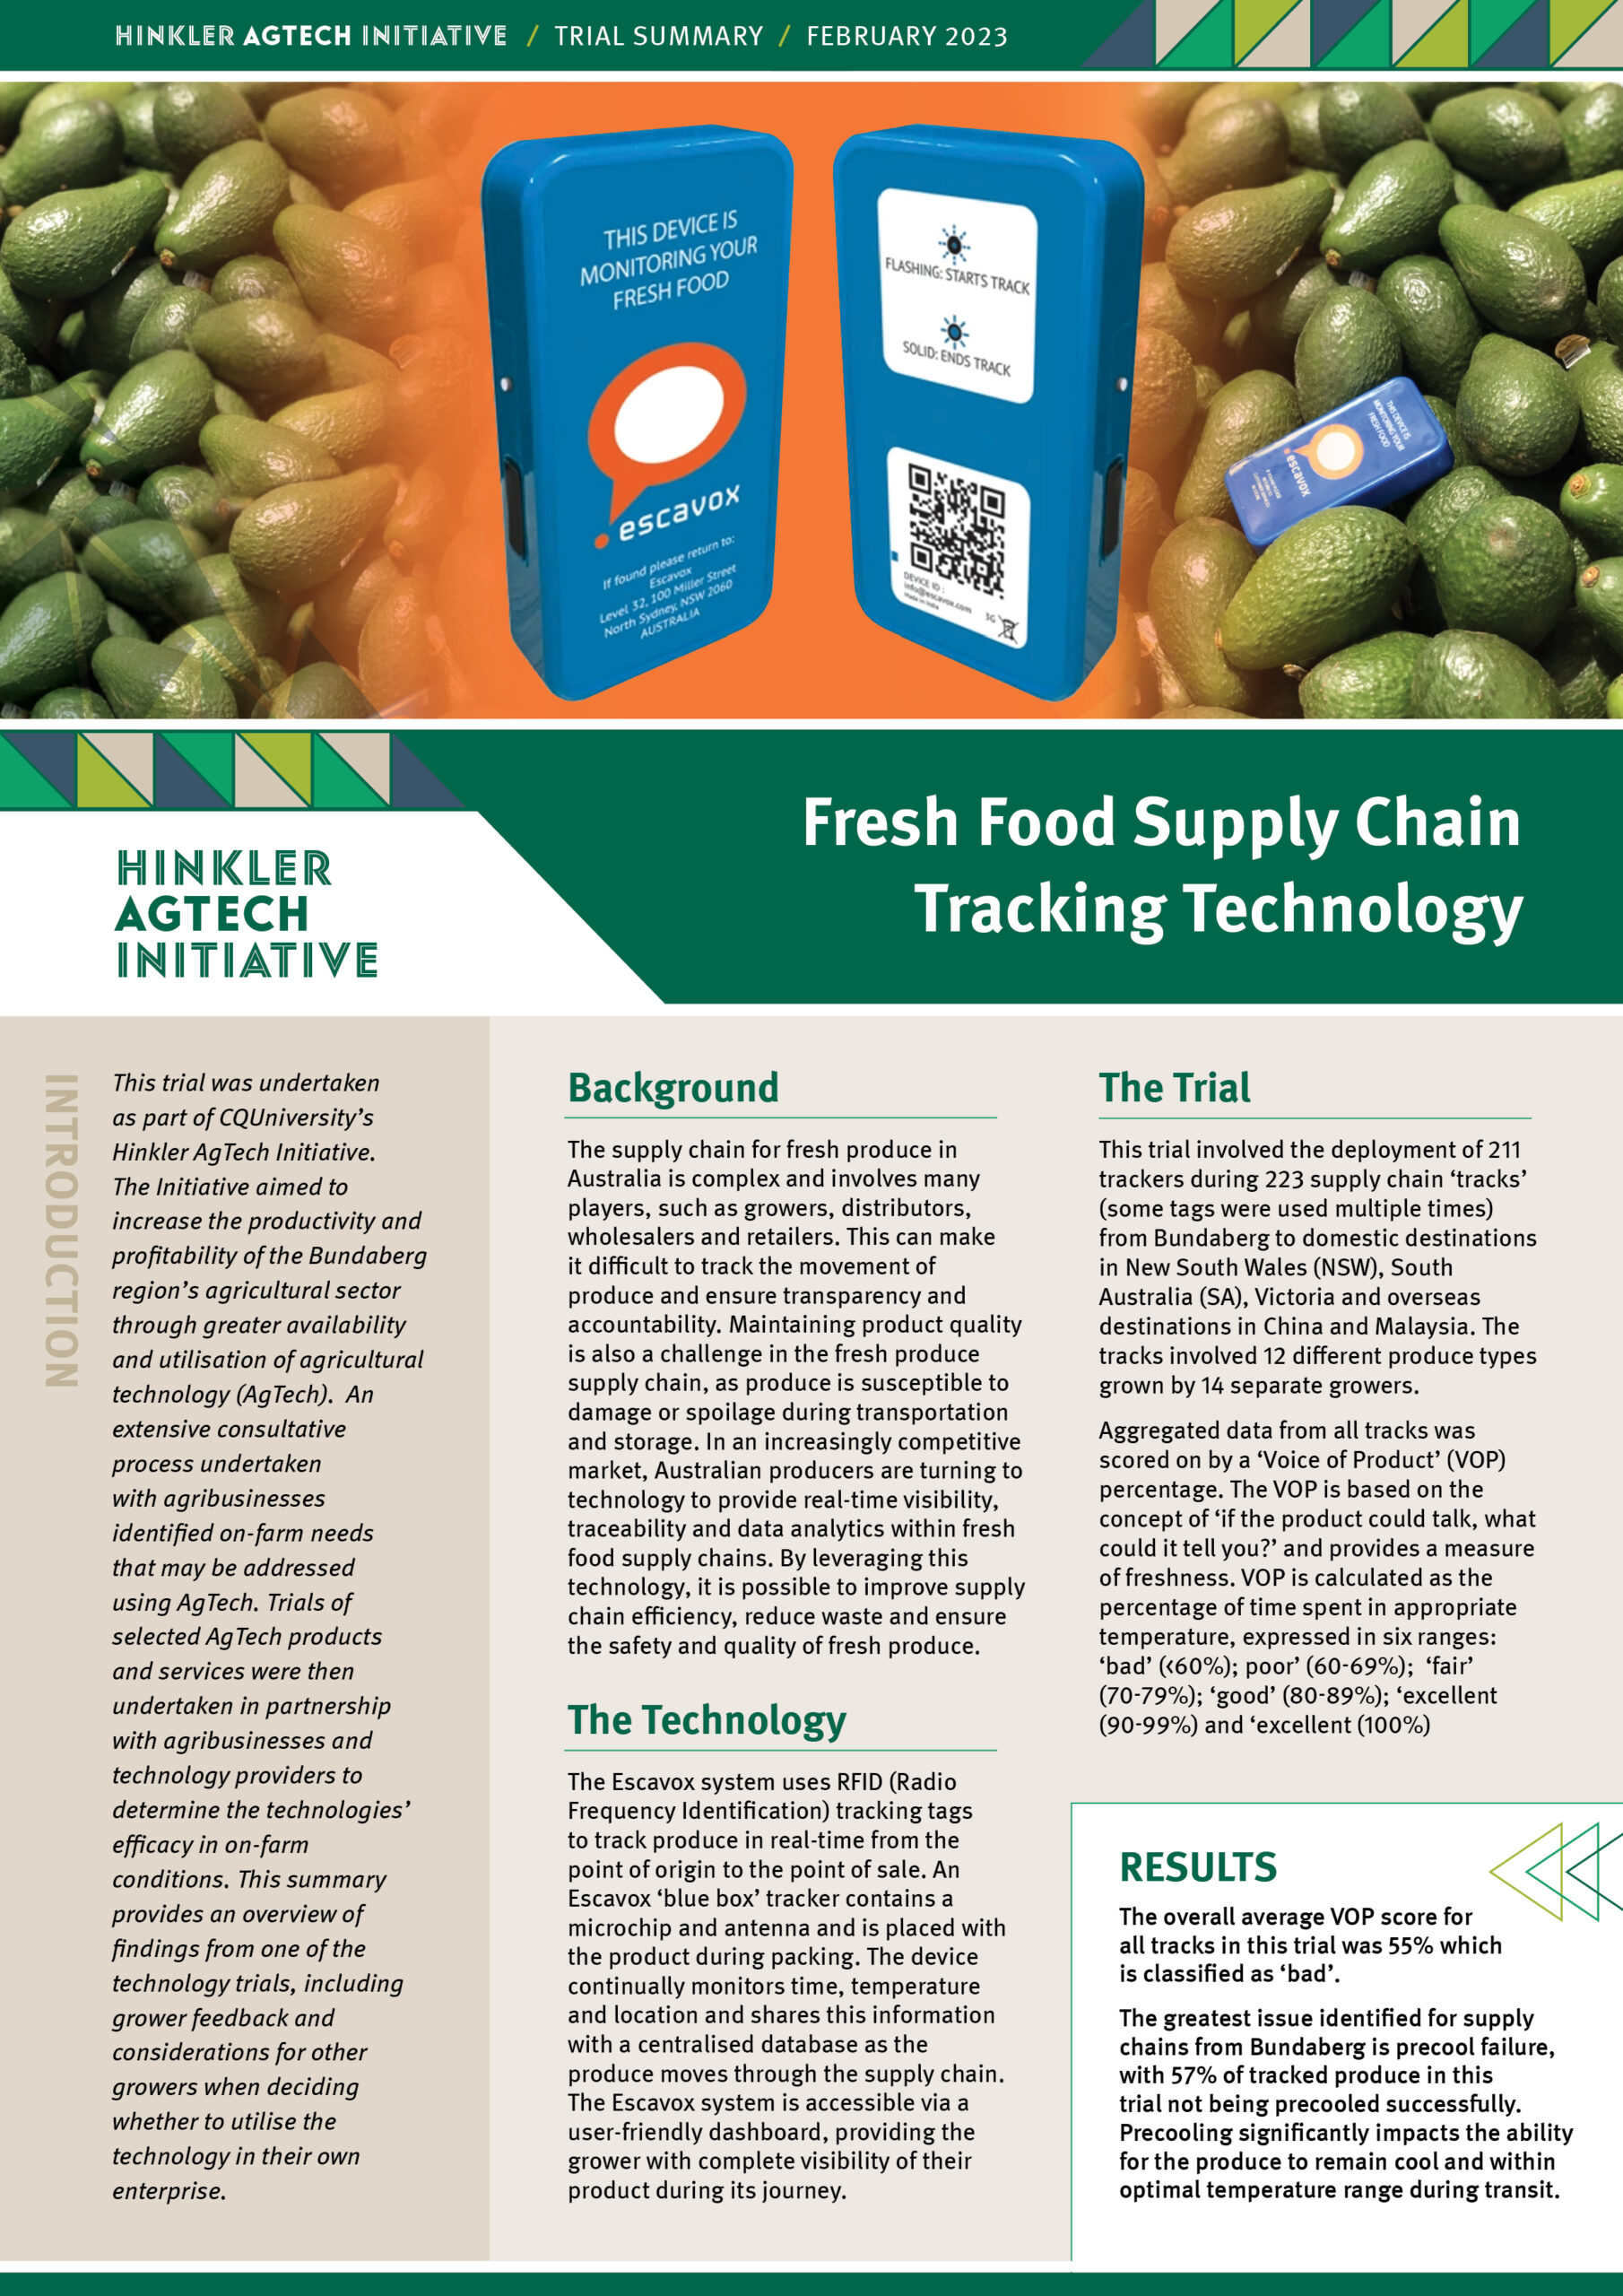 Fresh Food Supply Chain Tracking